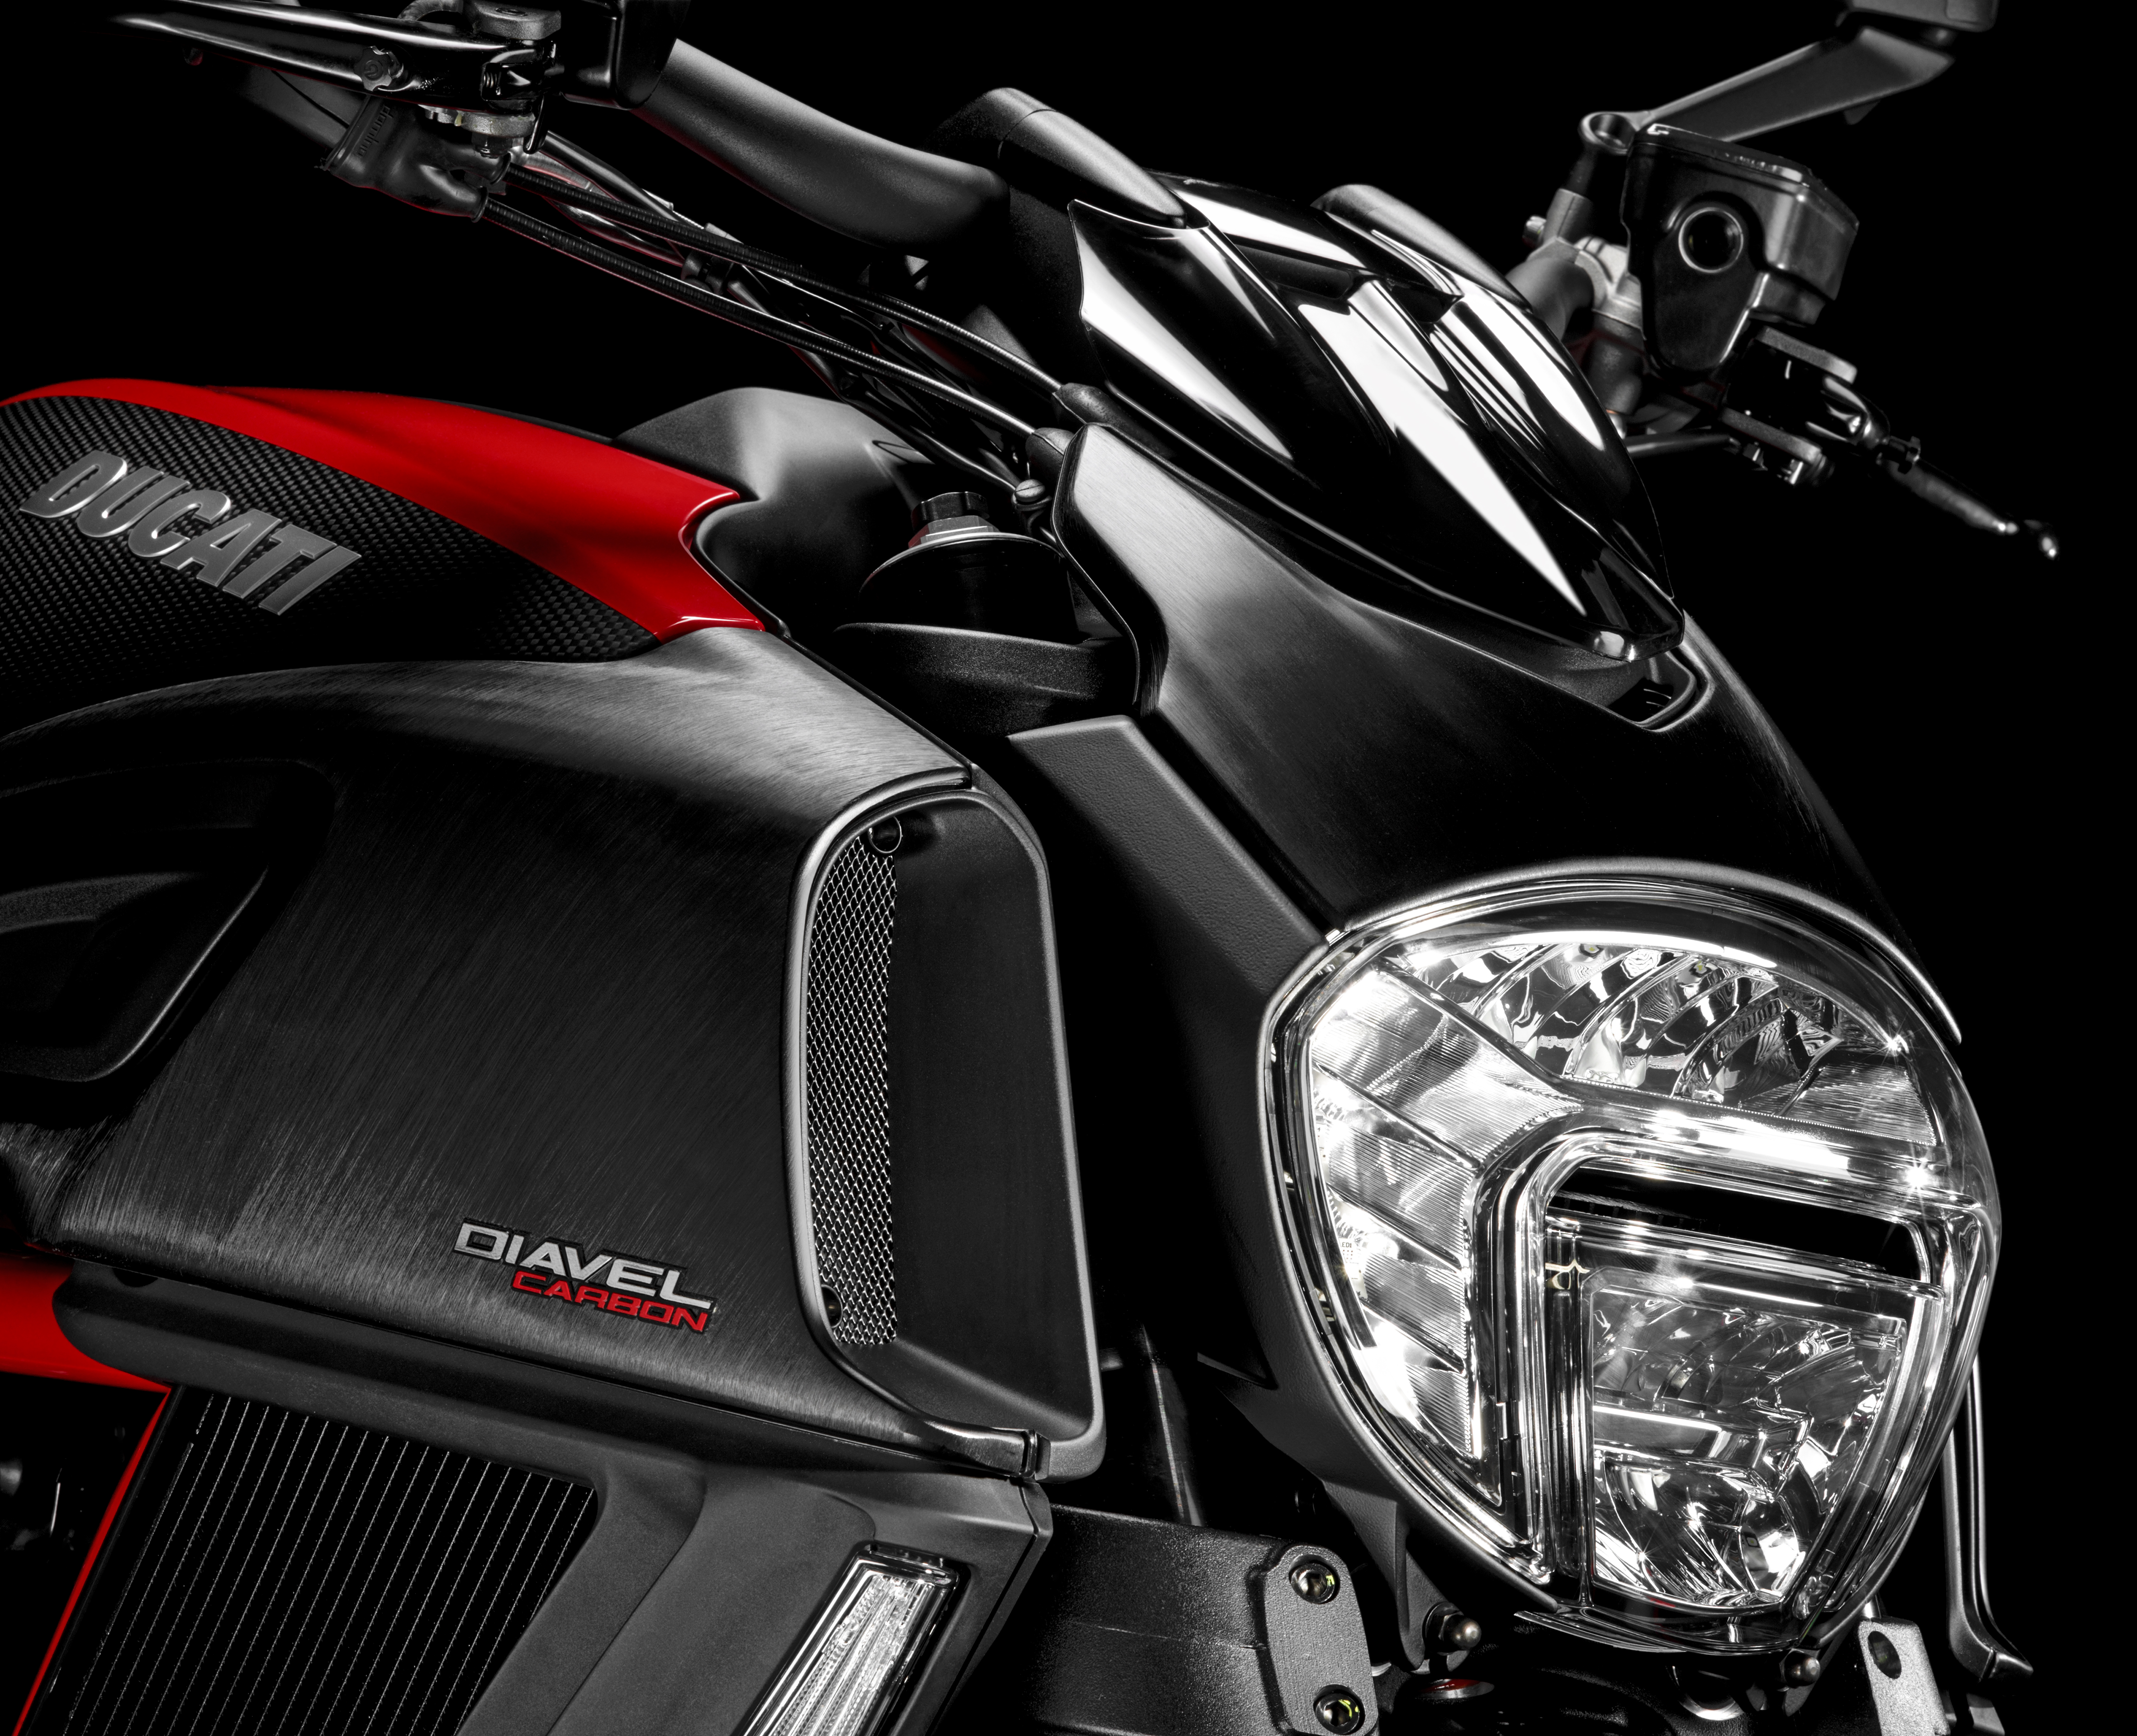 Updated Ducati Diavel unveiled